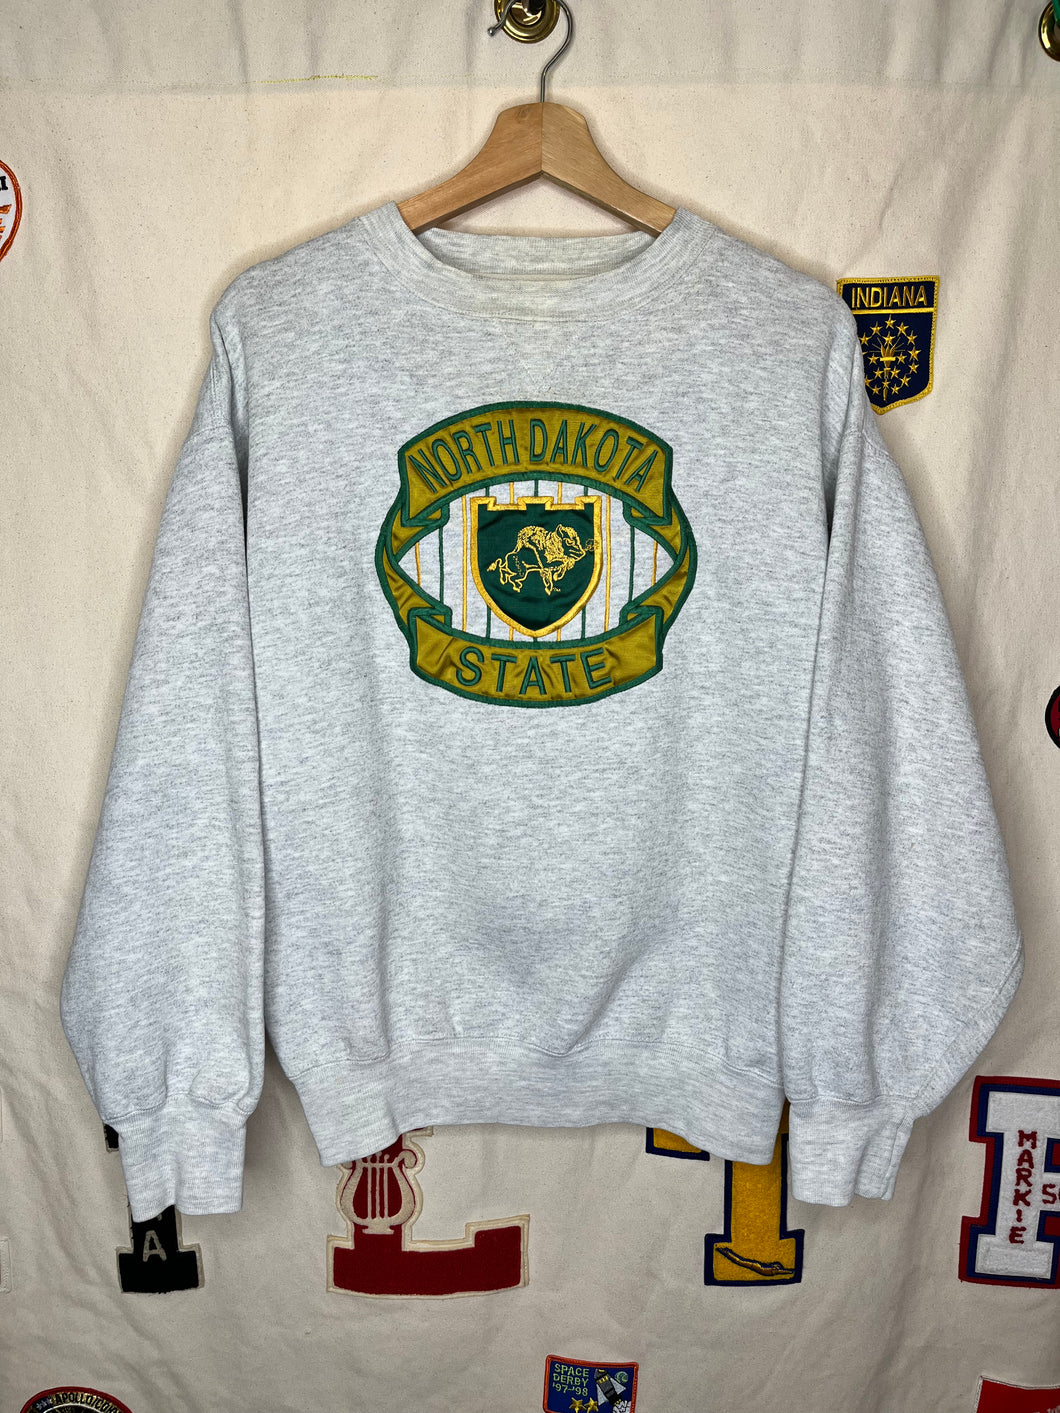 Vintage North Dakota State University Grey Crewneck Sweatshirt: Medium